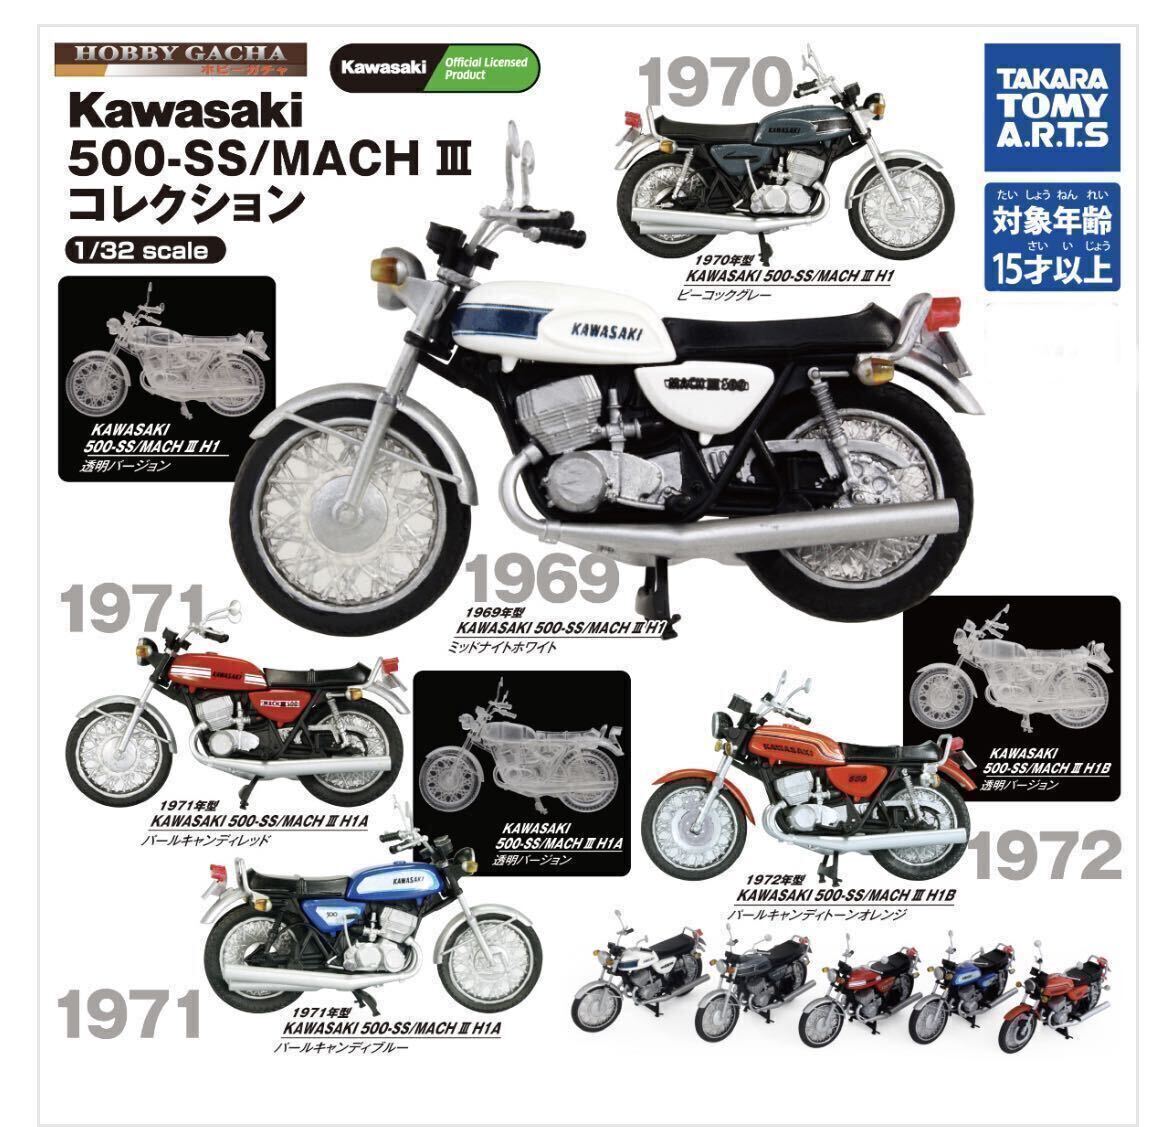 KAWASAKI 500-SS/MACH III コレクション 1972年型 H1B パールキャンディトーンオレンジ バンダイ ガチャ新品未使用品の画像2